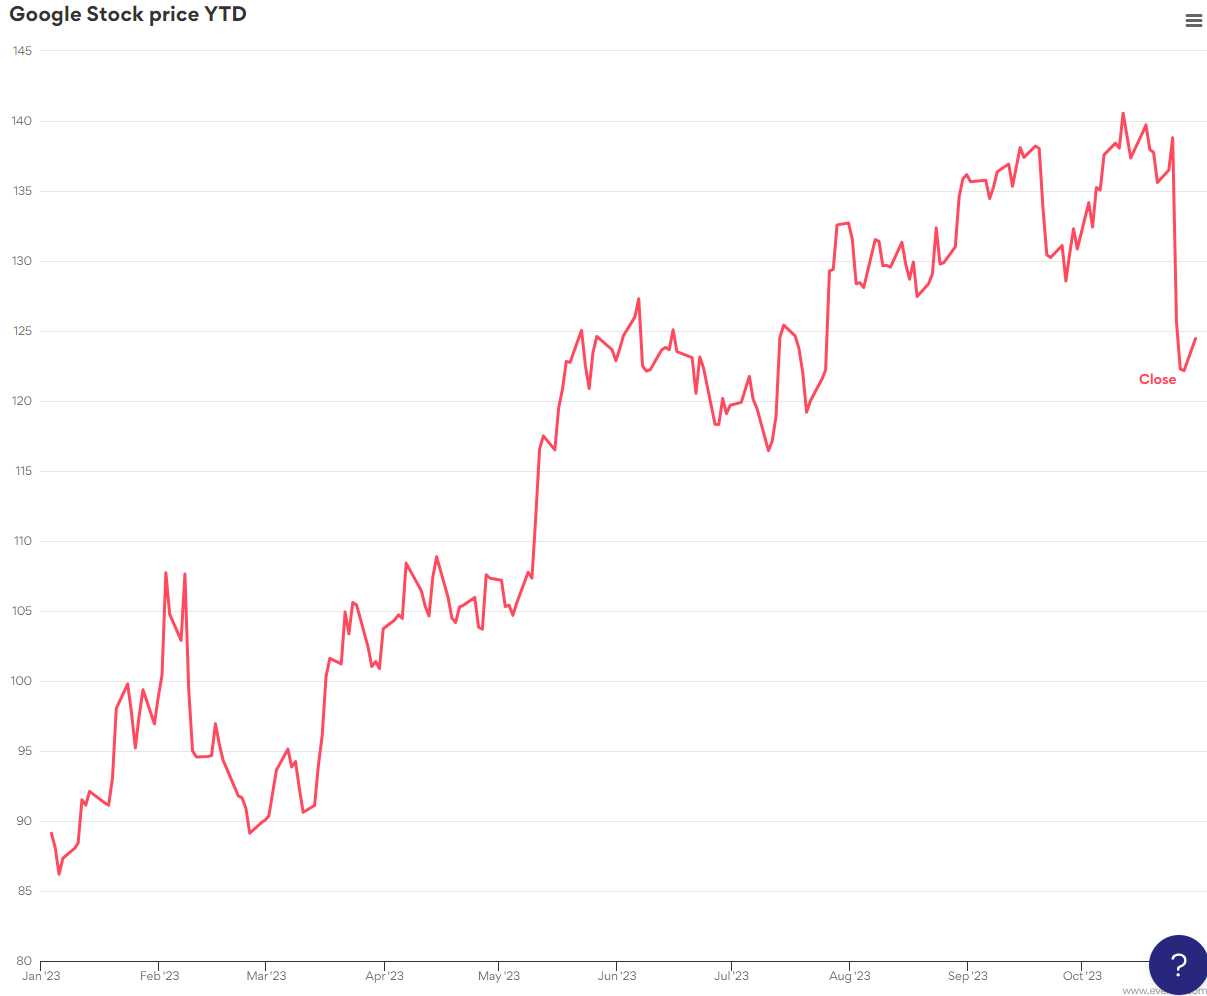 Google Stock price YTD - Line chart